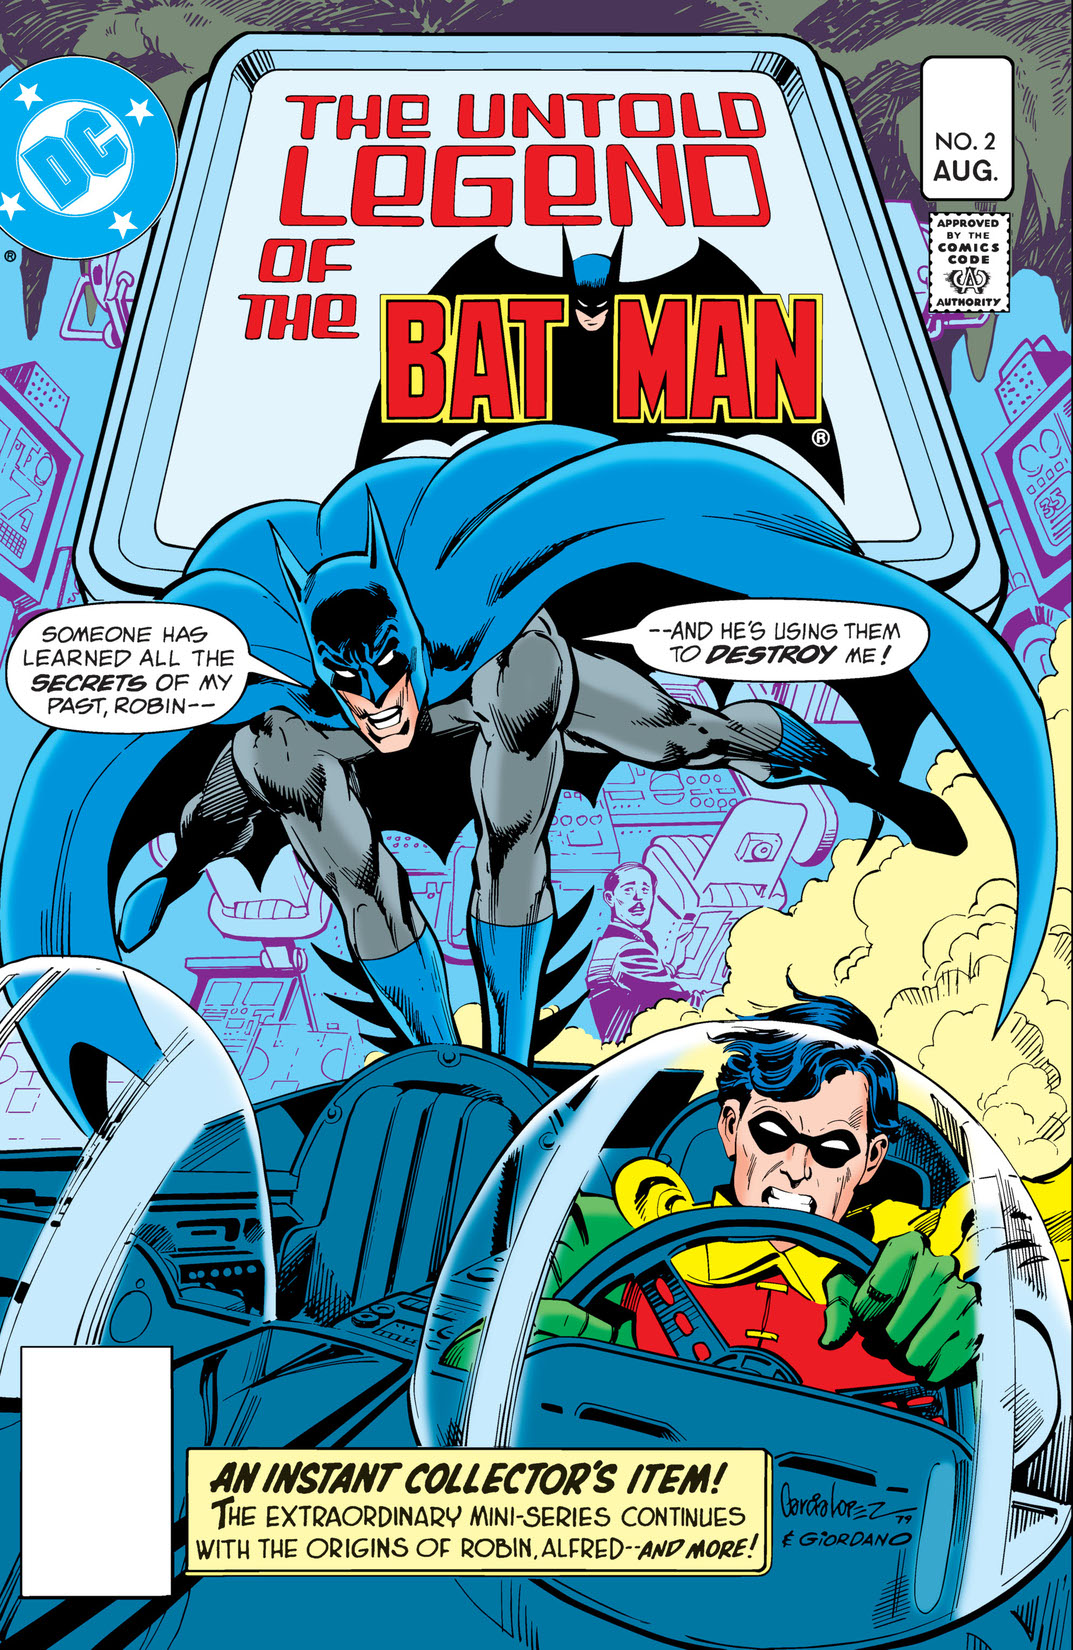 The Untold Legend of the Batman #2 preview images